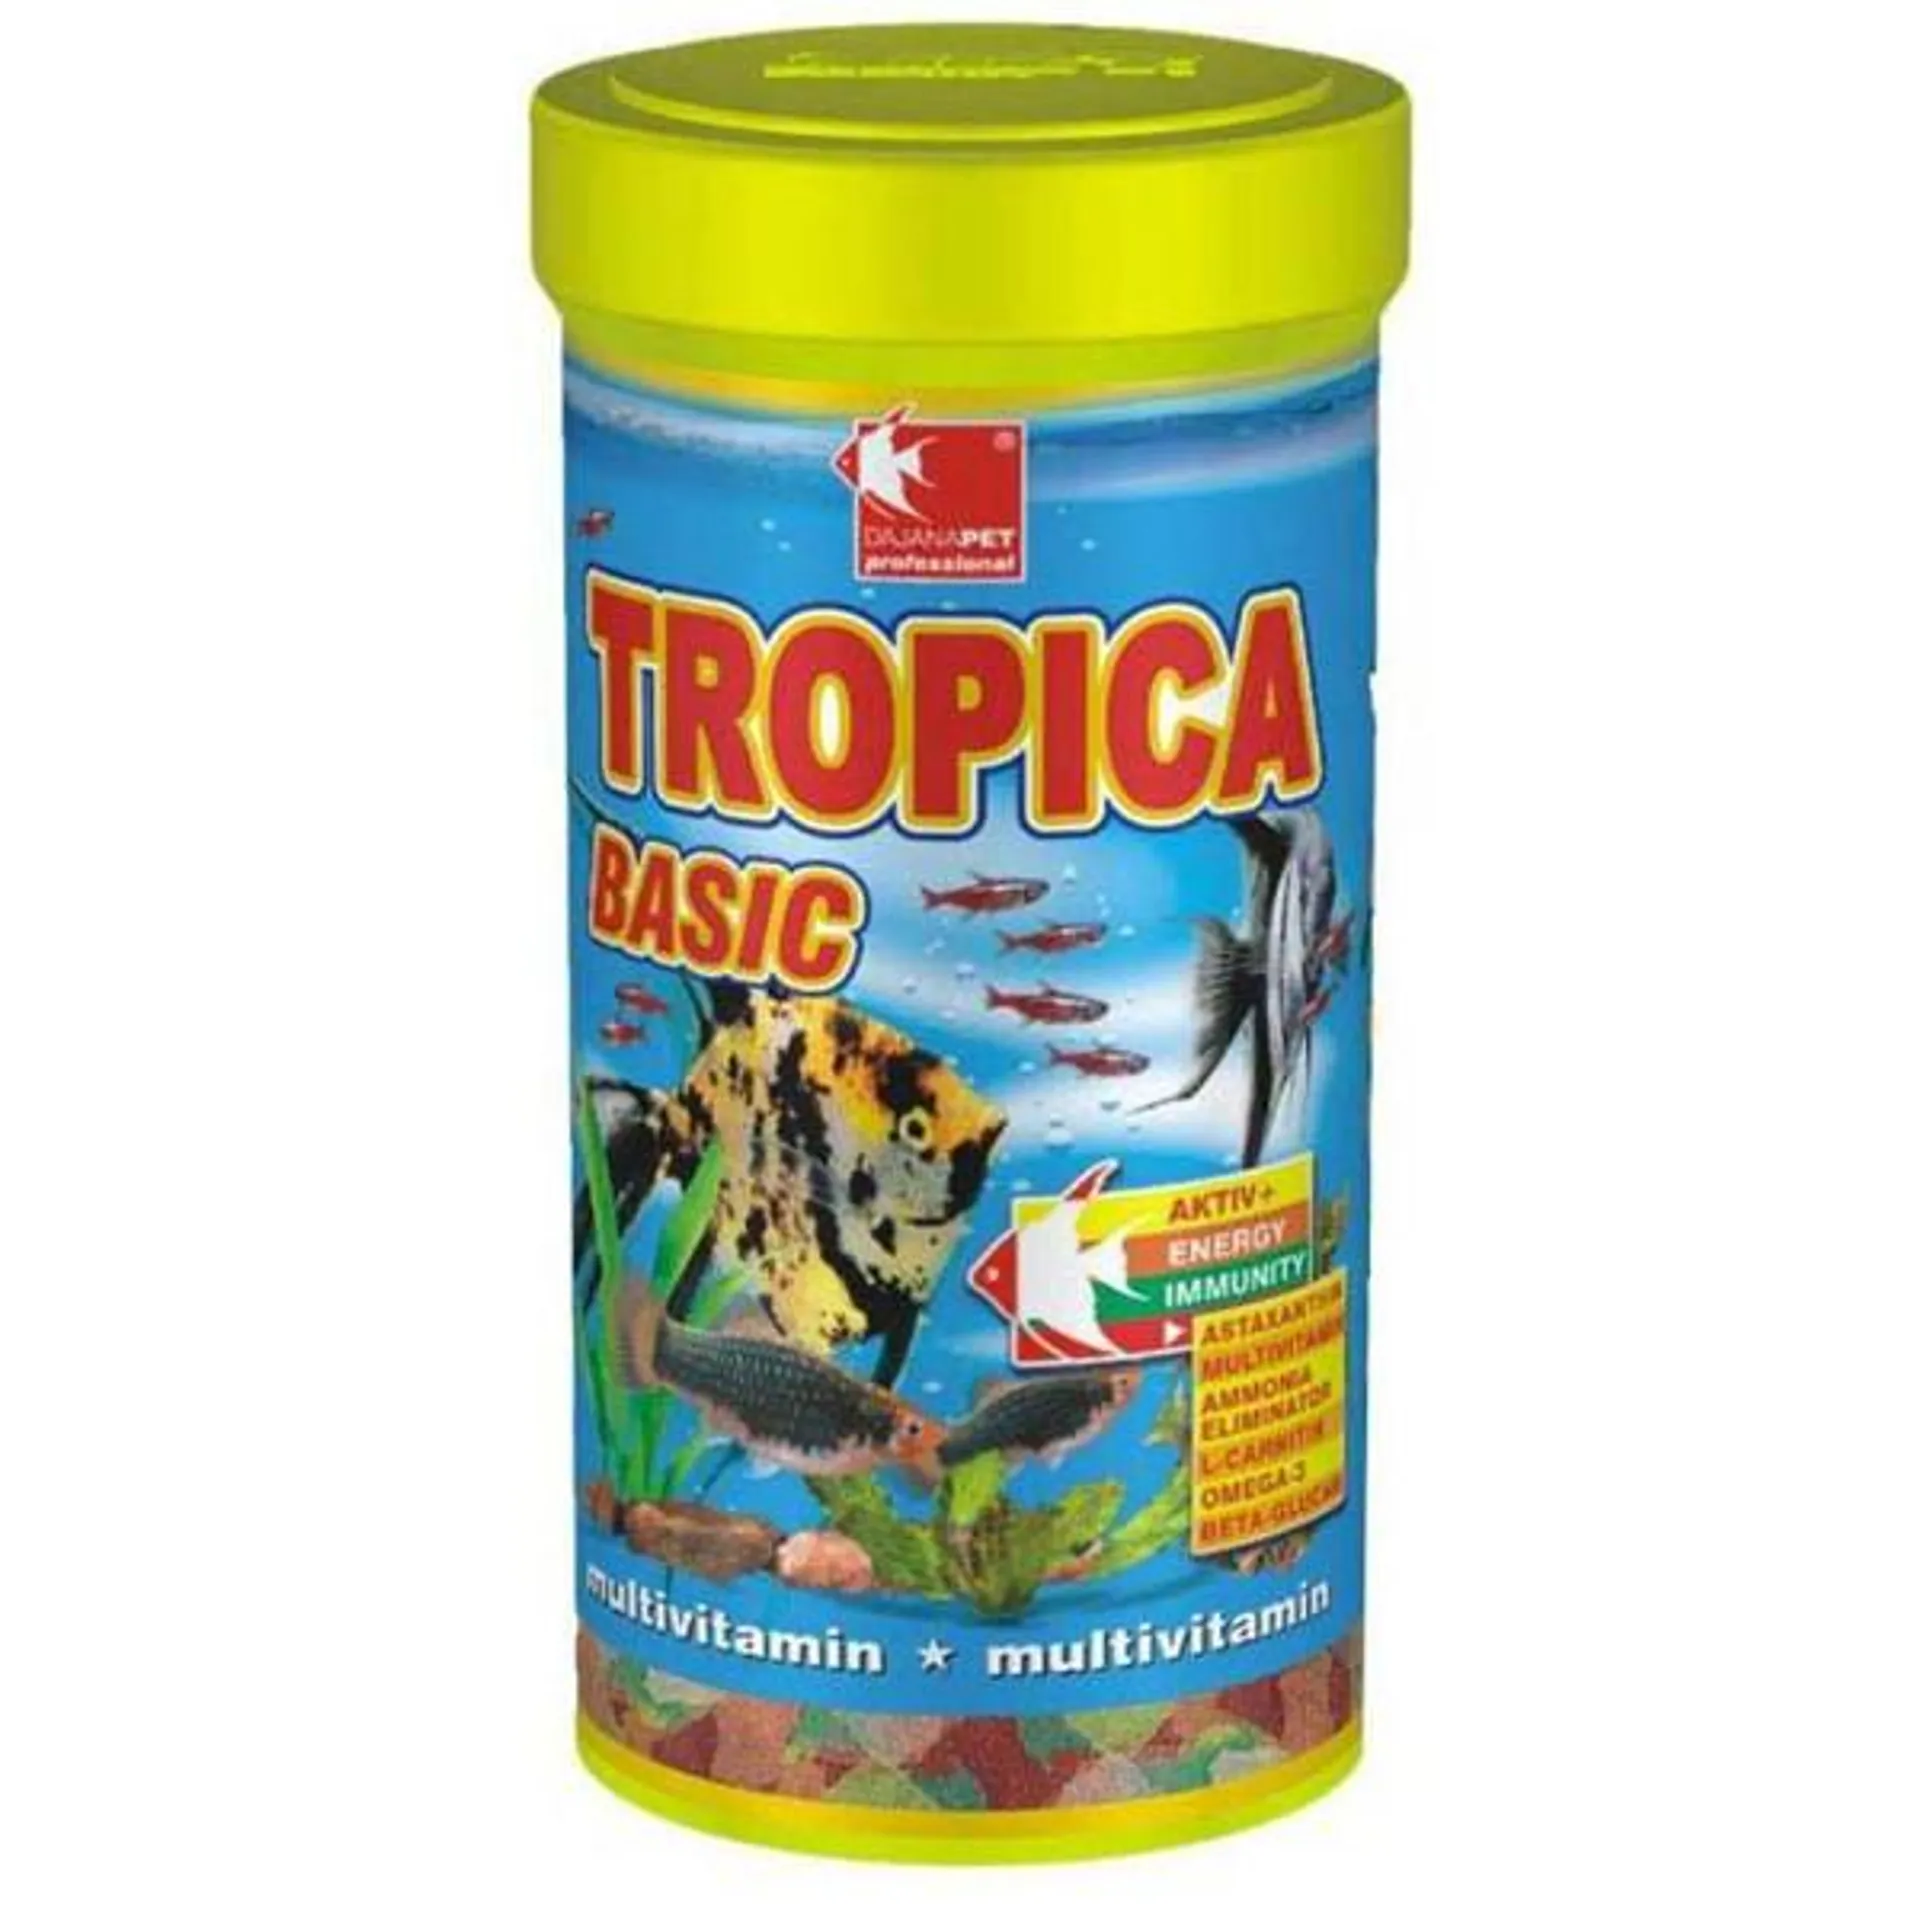 DAJANA Basic Tropical hrana za tropske ribice